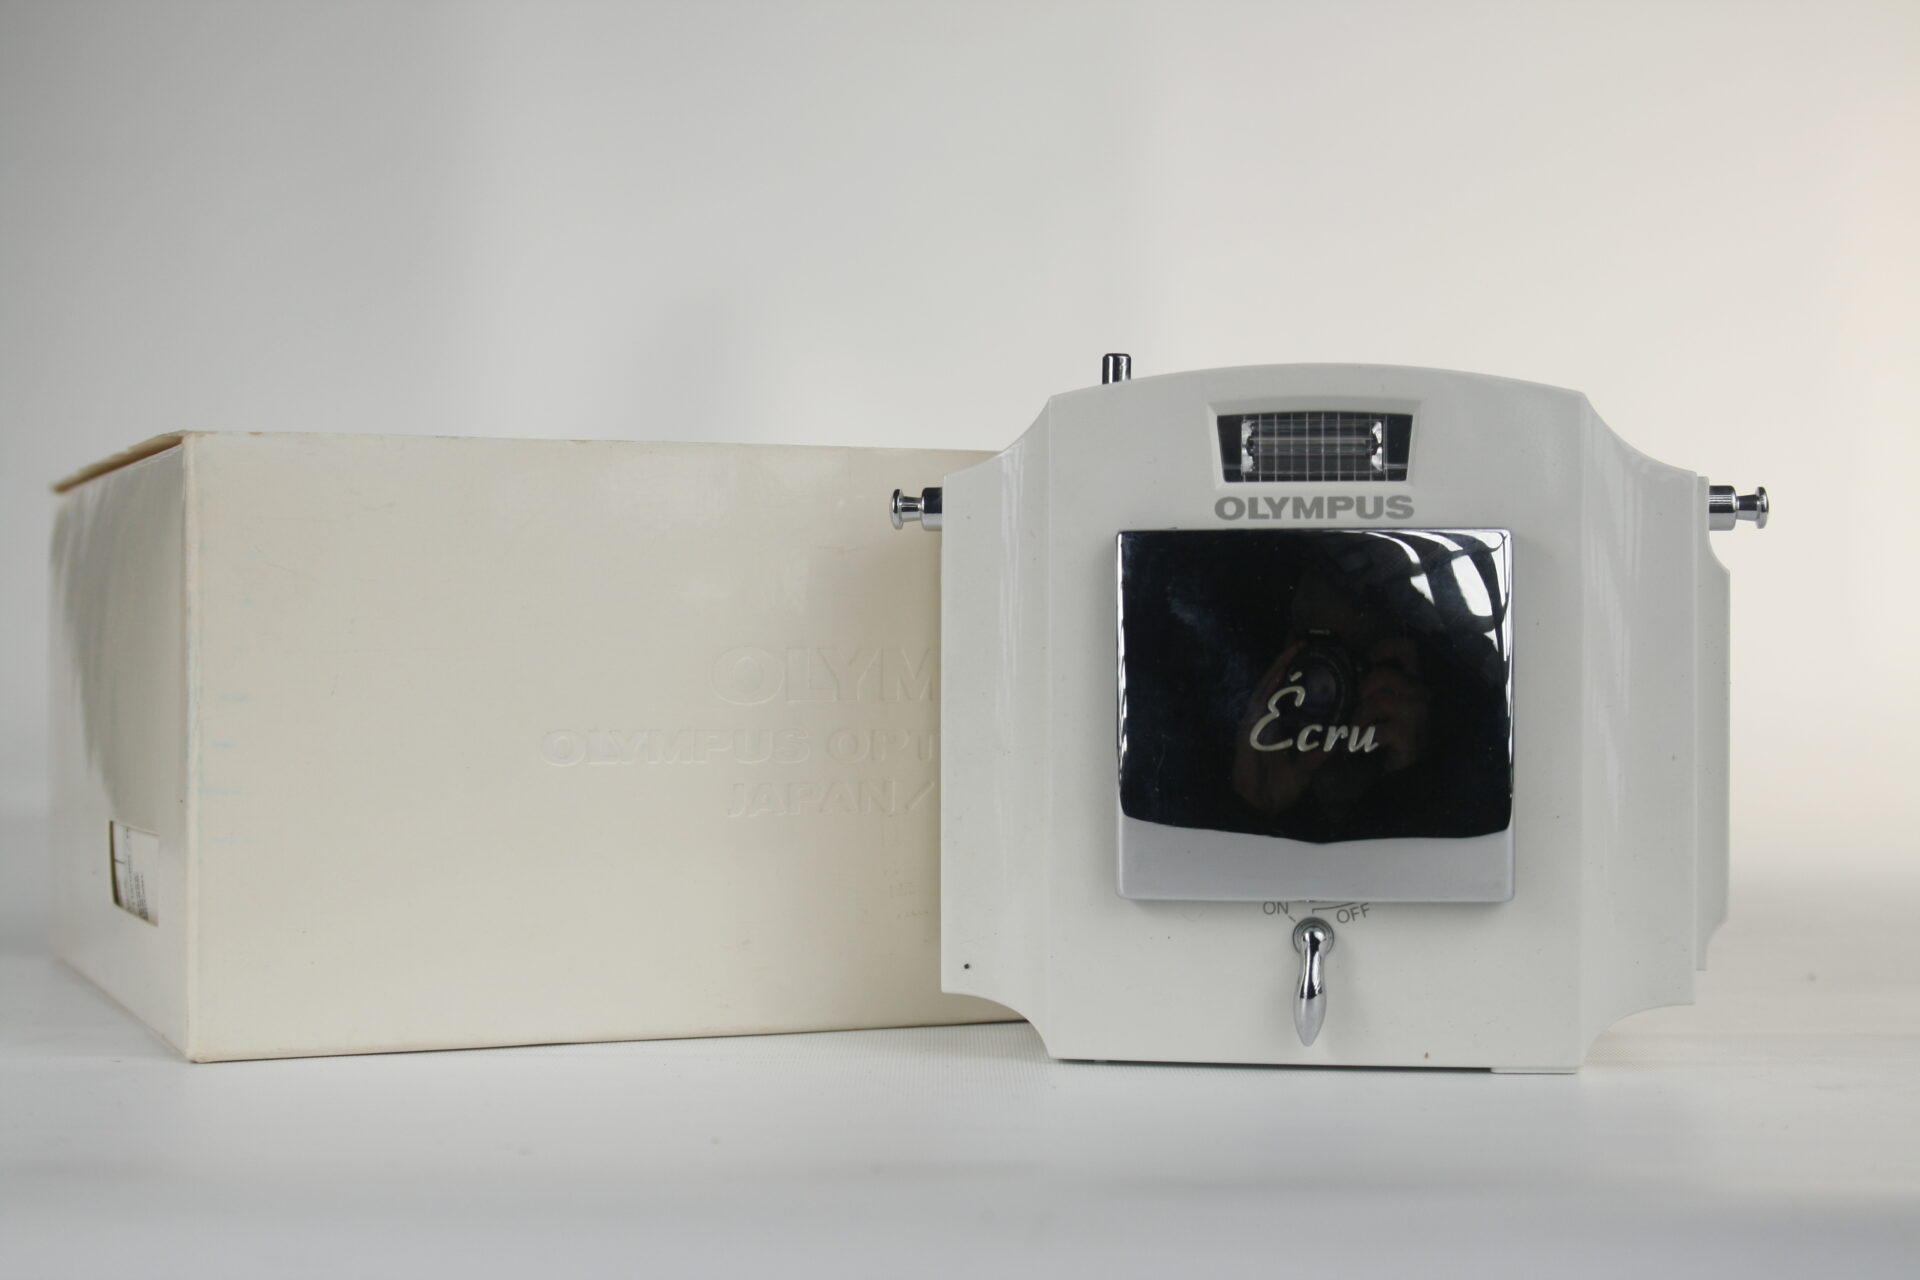 Olympus Ecru. 35mm compact camera. 1991. Japan.